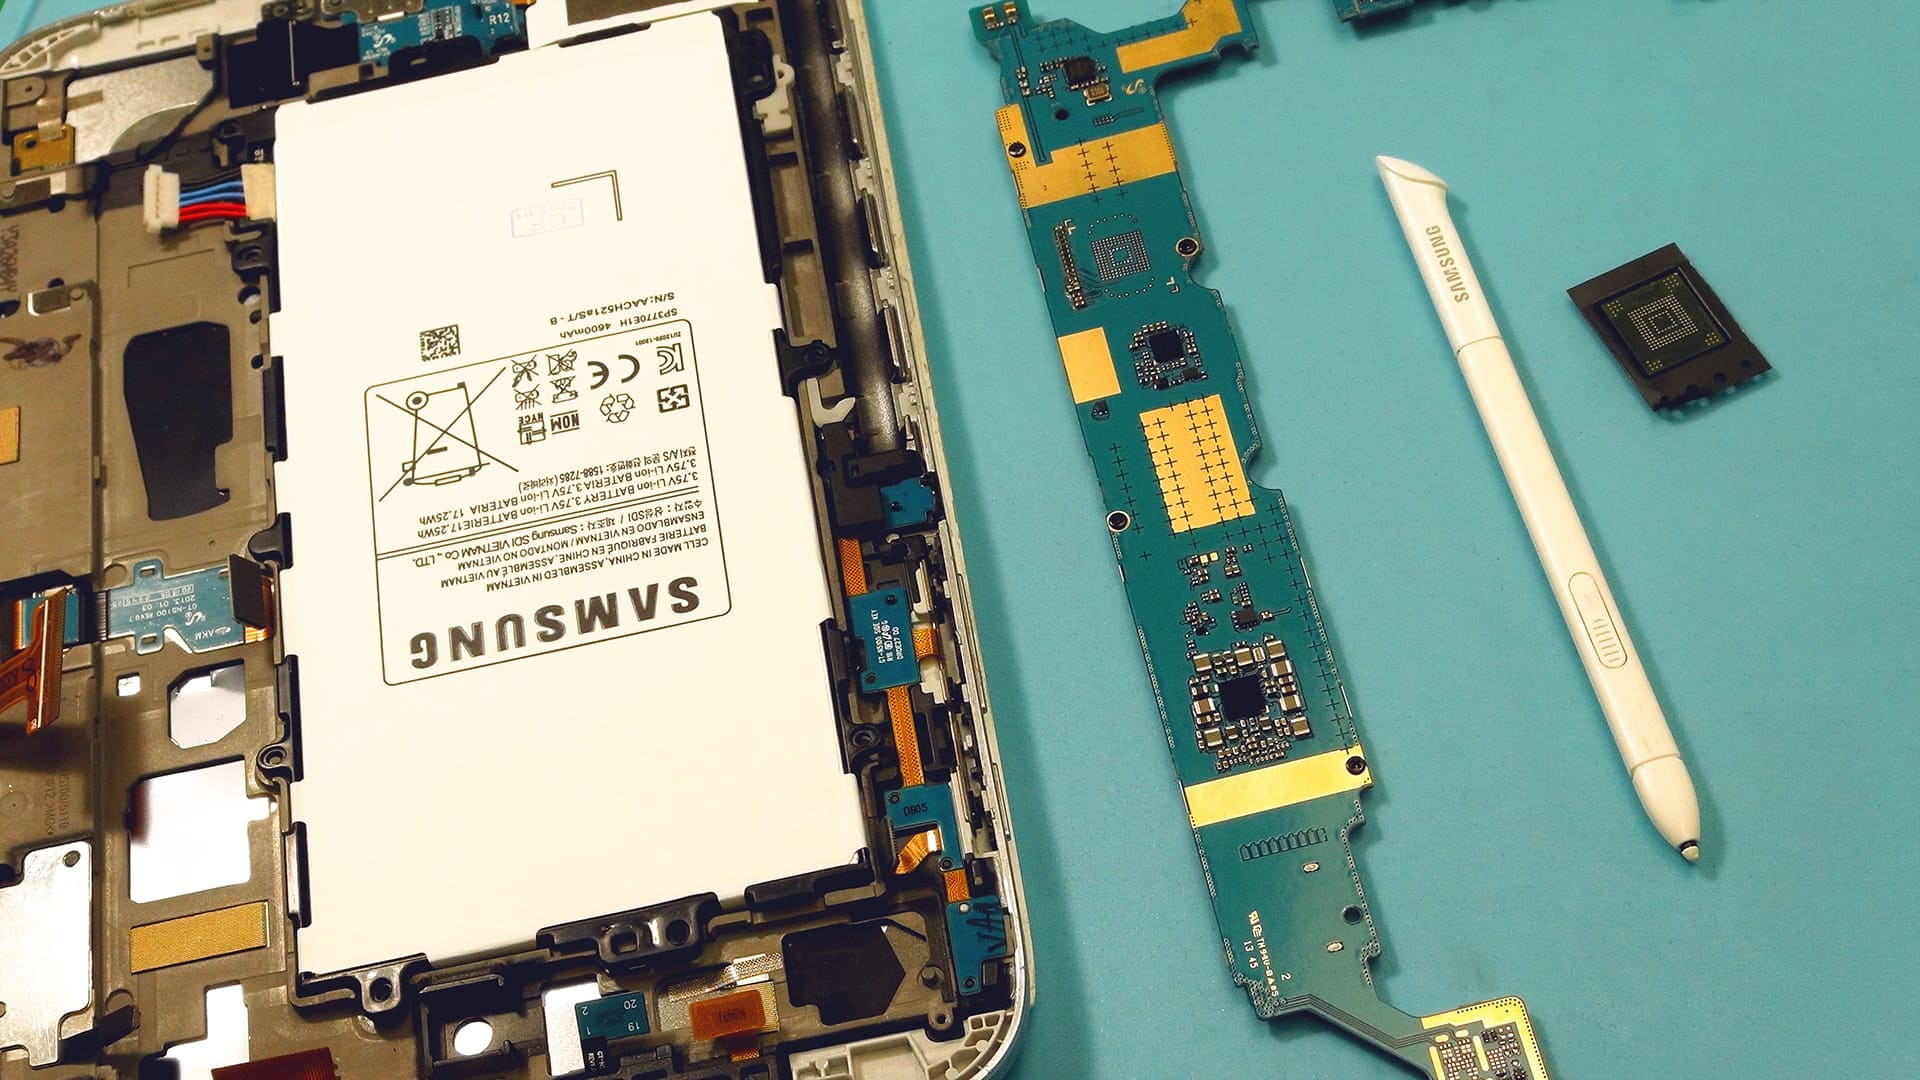 Ремонт Samsung Galaxy Note 8.0 N5100, замена флеш памяти